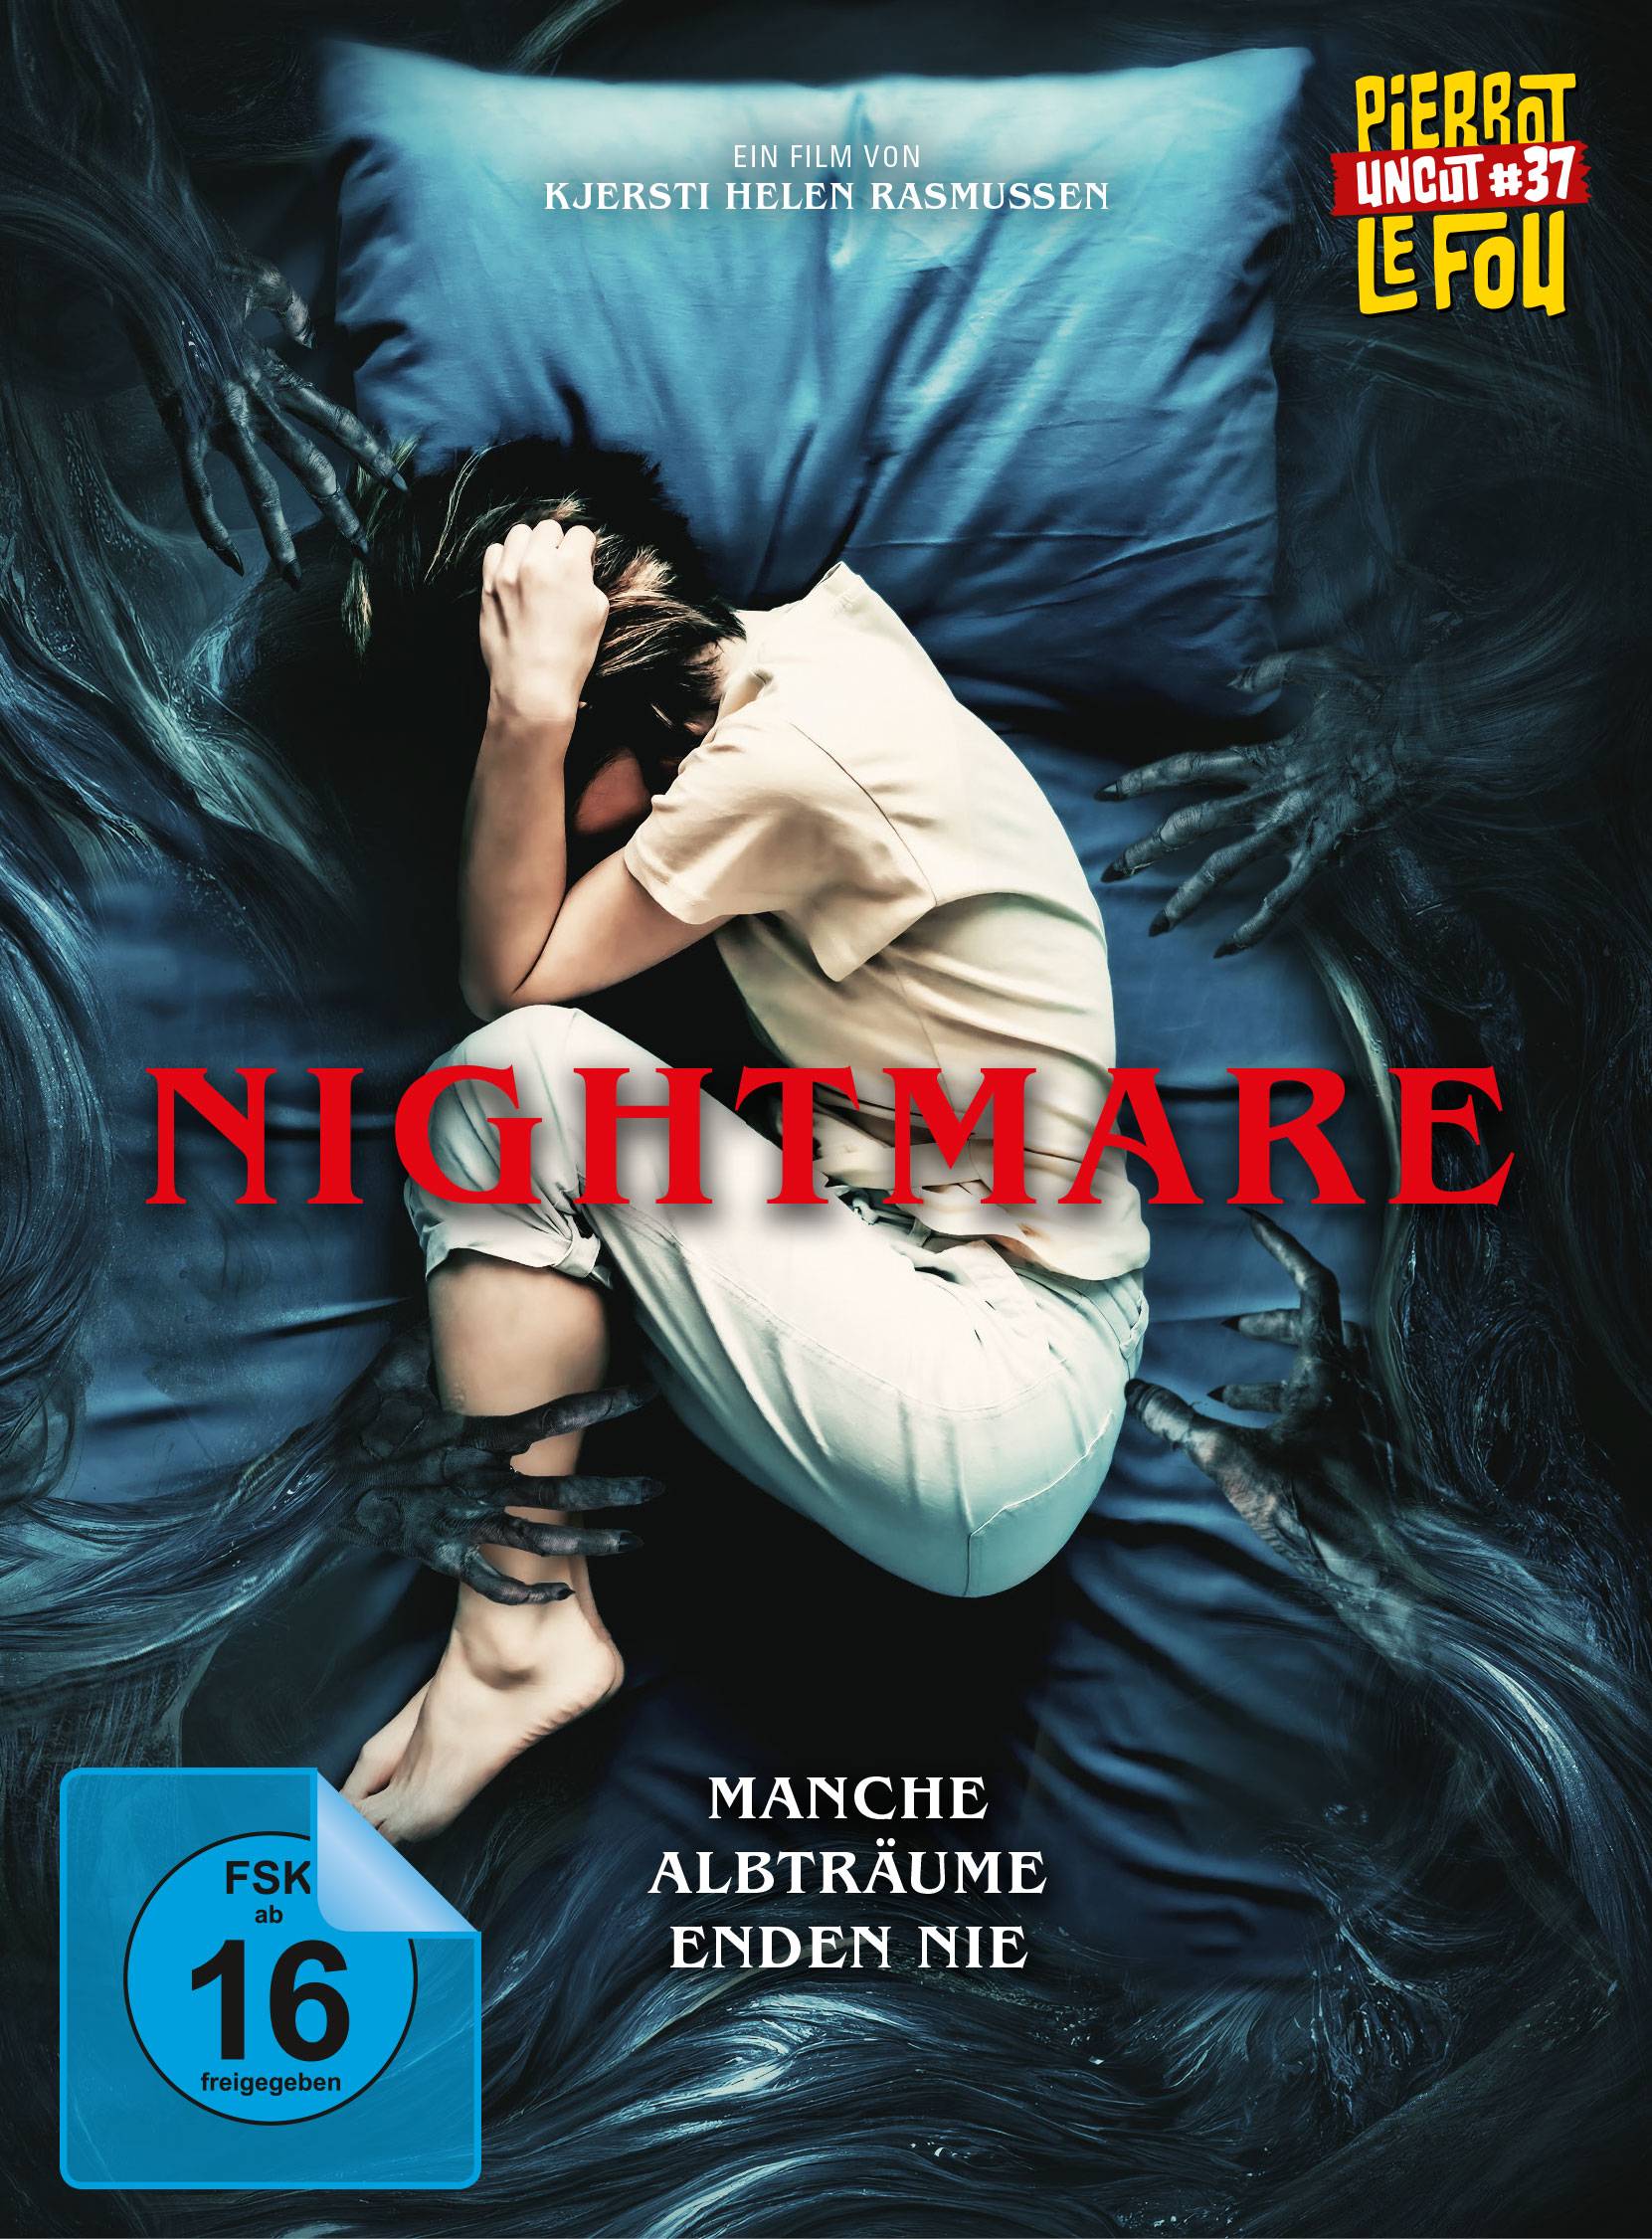 Nightmare - Limited Edition Mediabook (uncut) (Blu-ray + DVD)